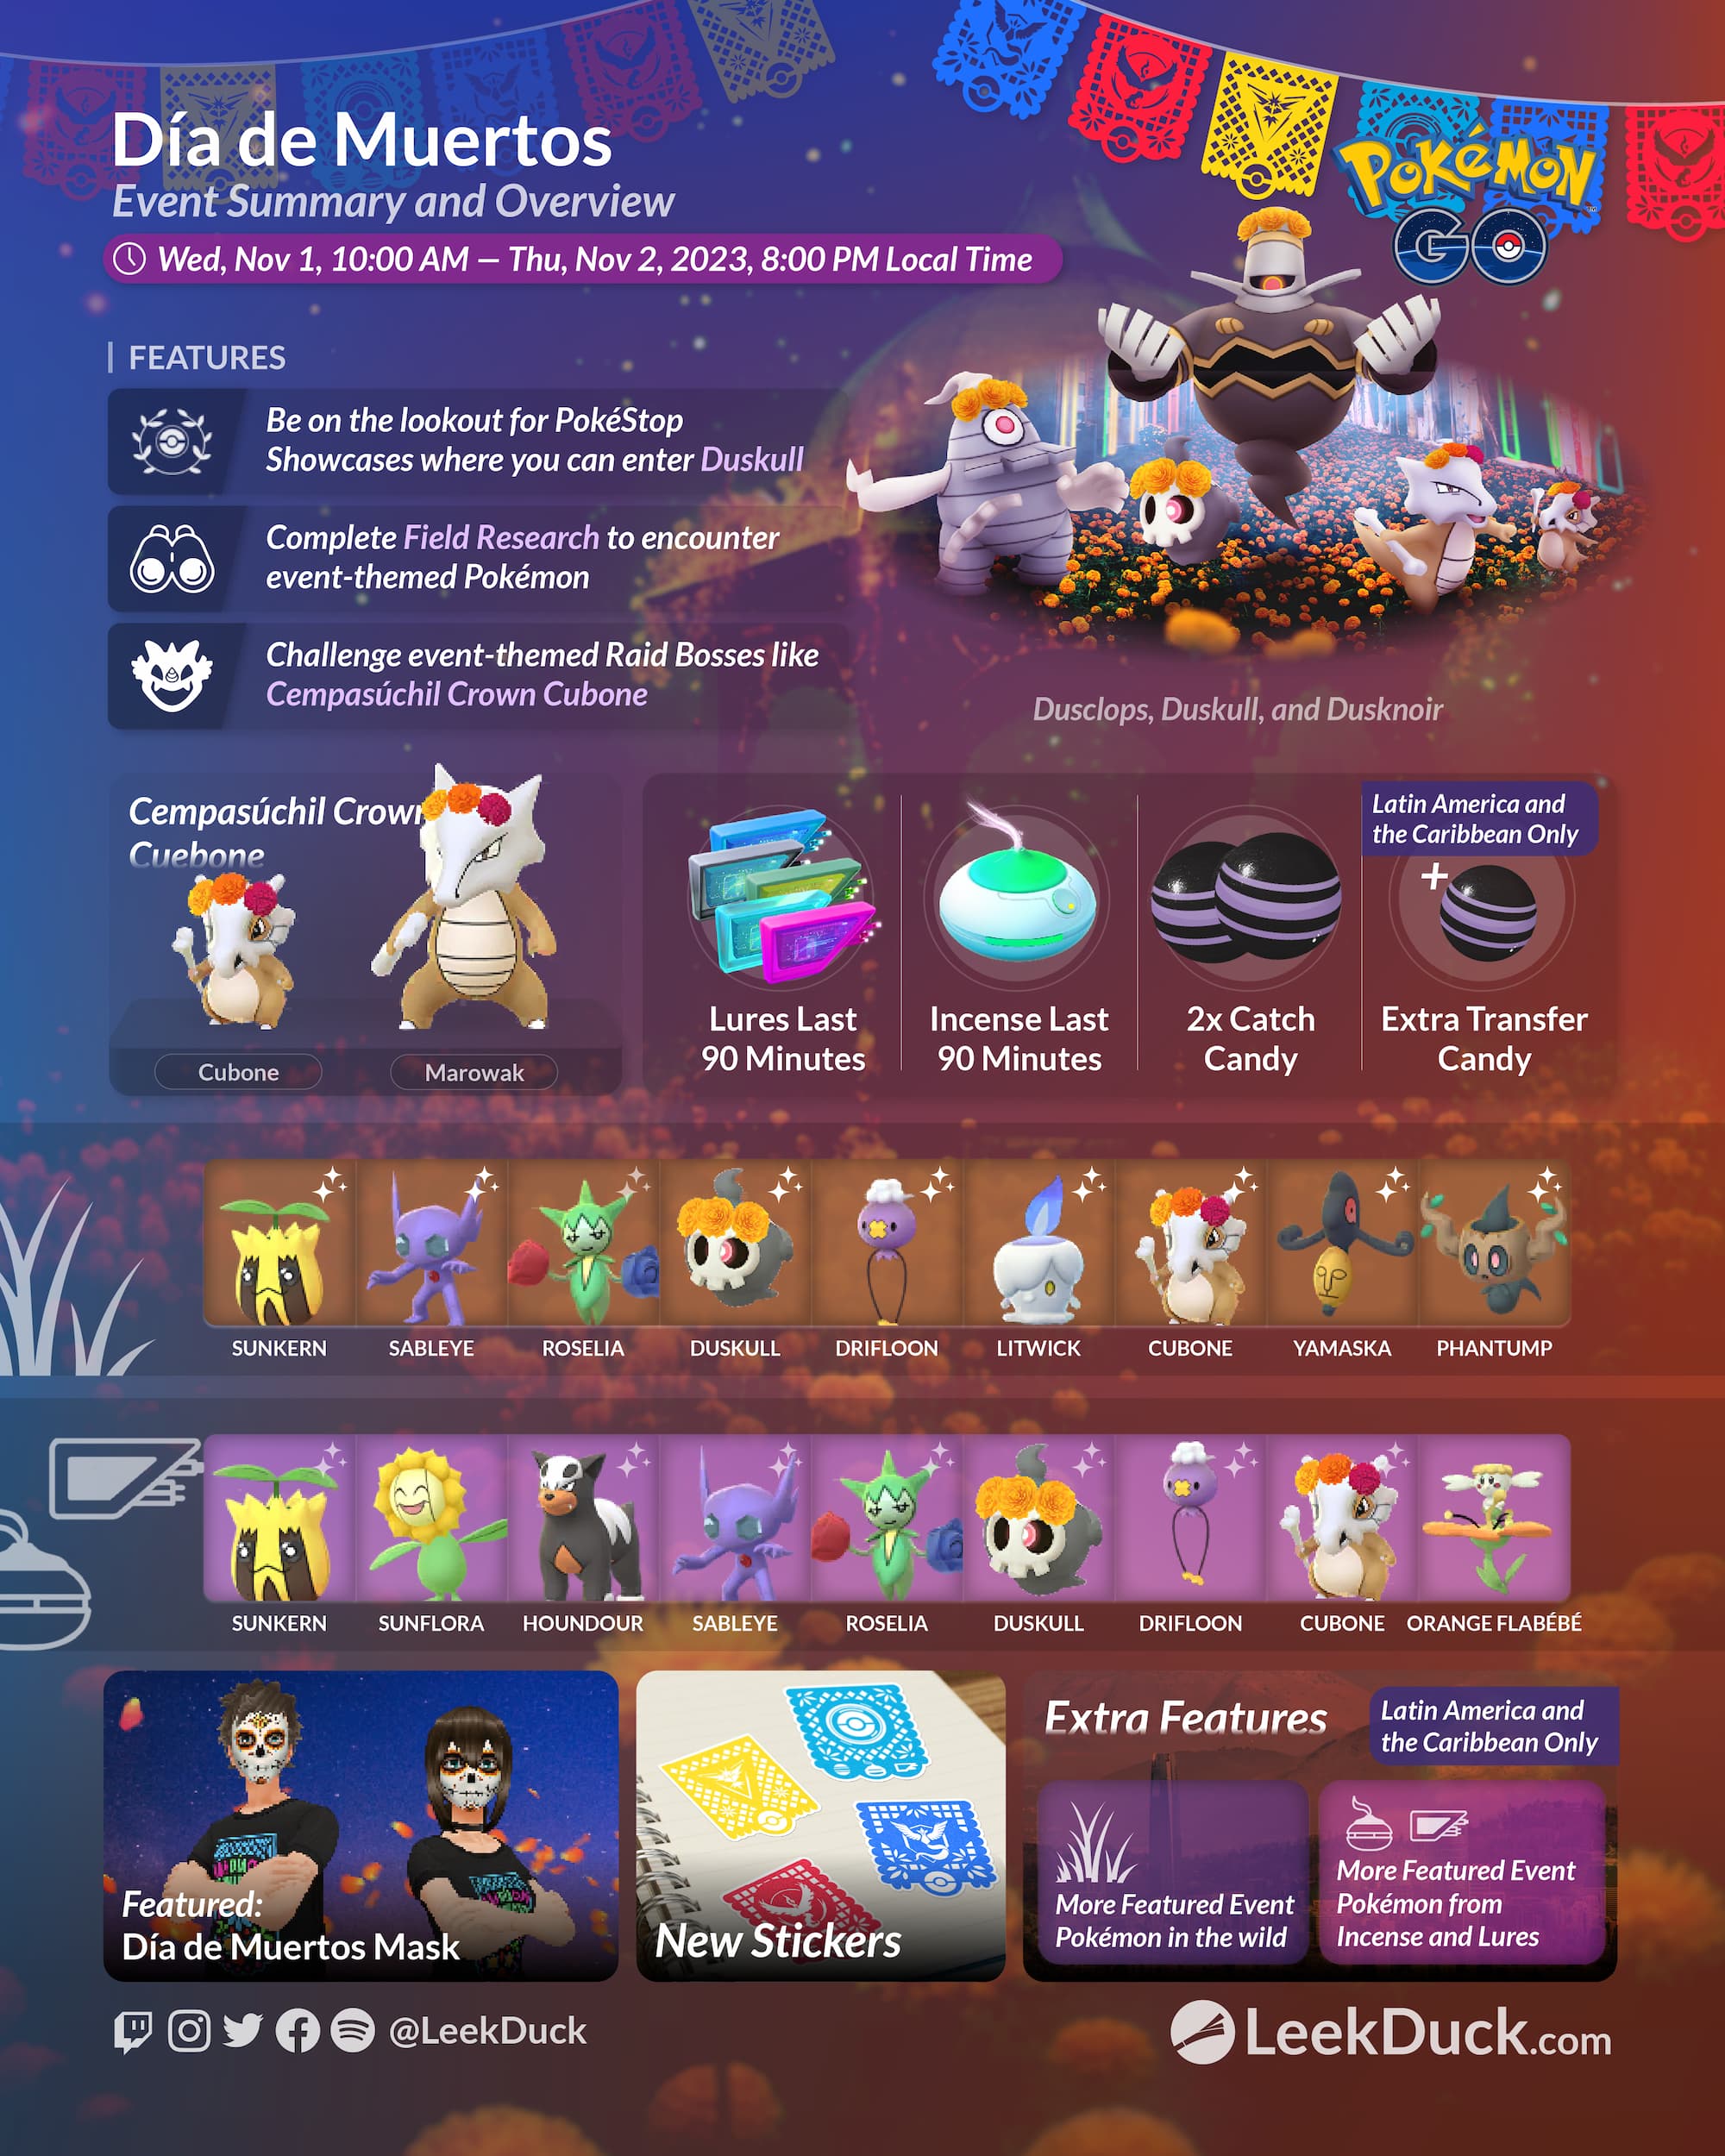 Pokémon GO New Year's 2023 Event - Leek Duck